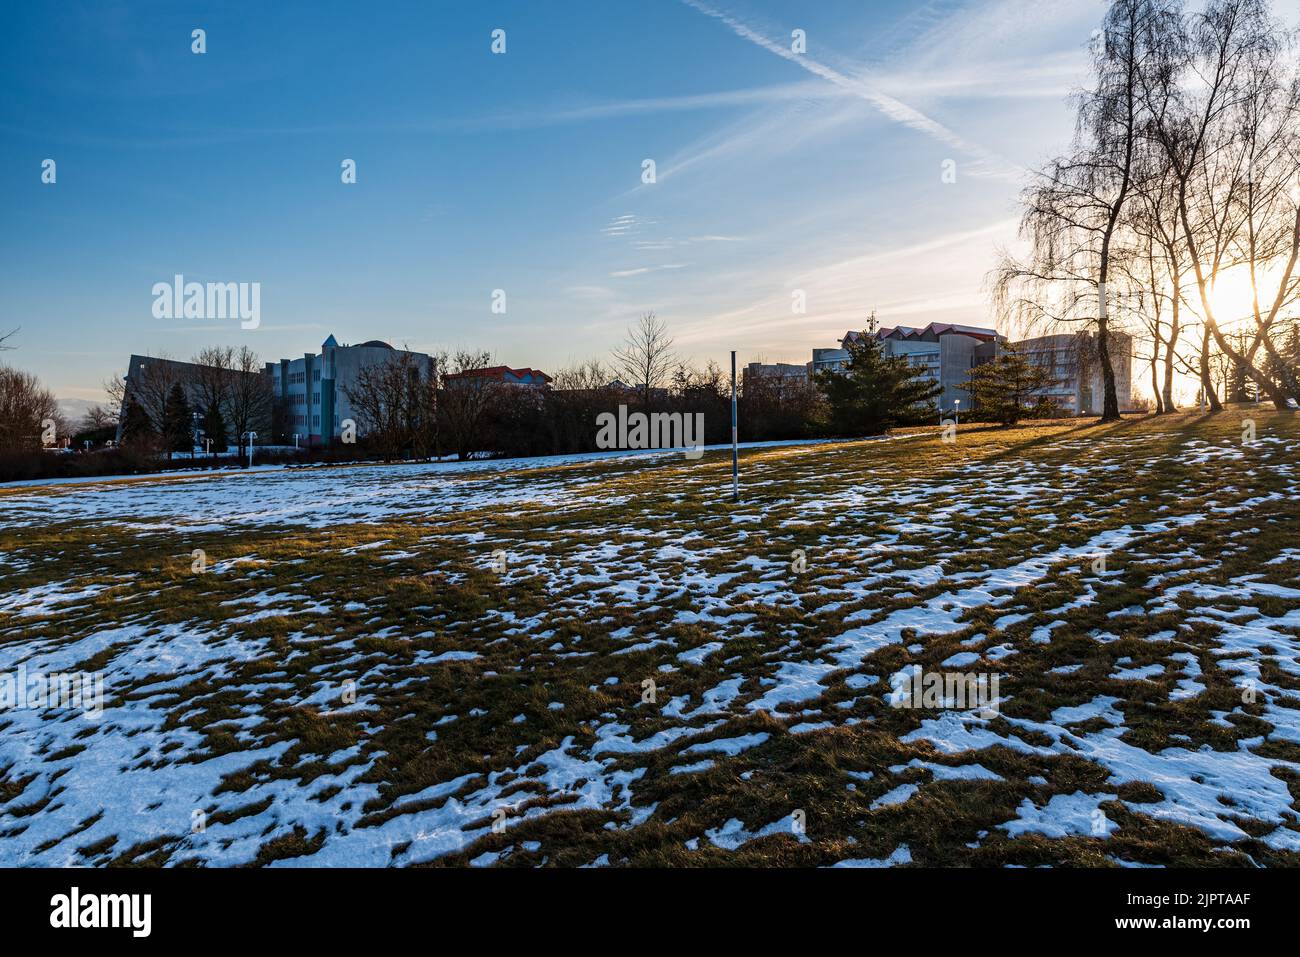 Klimkovice health spa near Ostrava city in Czech republic during beautiful winter day Stock Photo